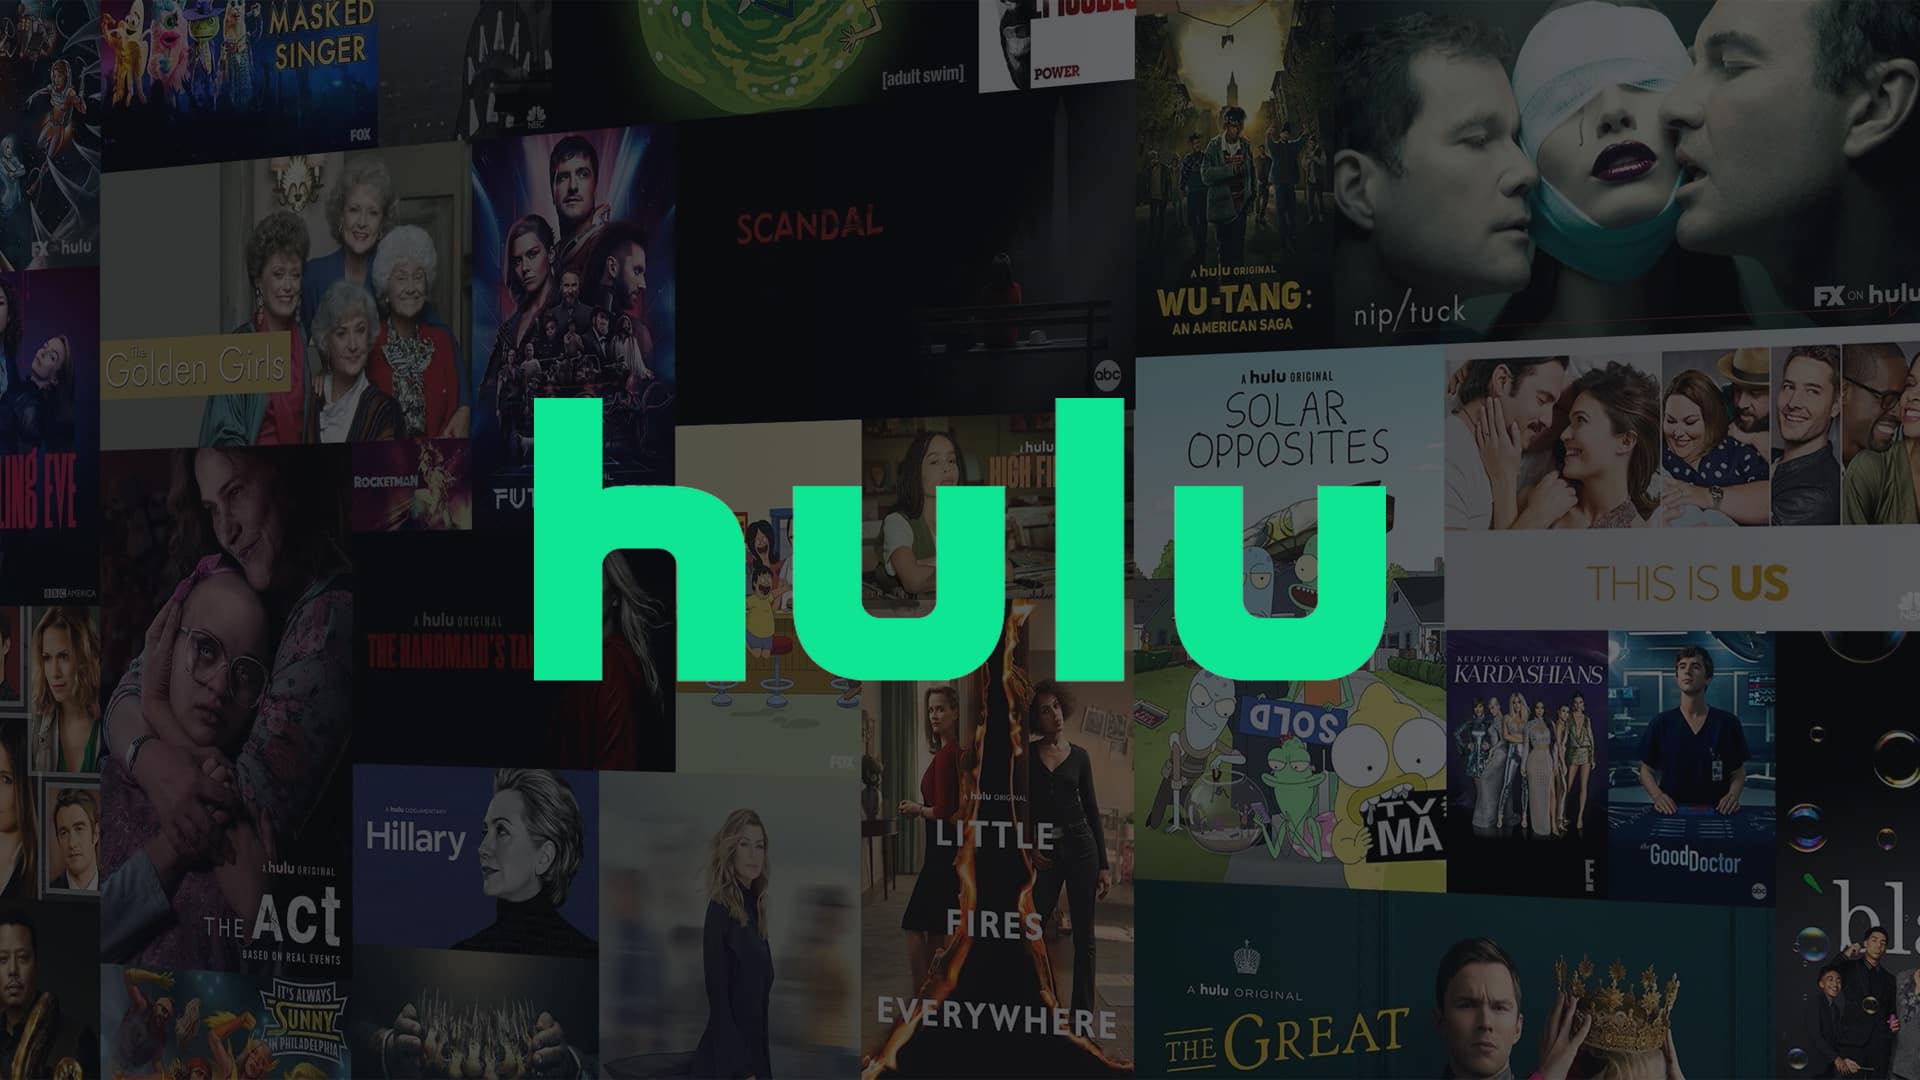 Hulu background image